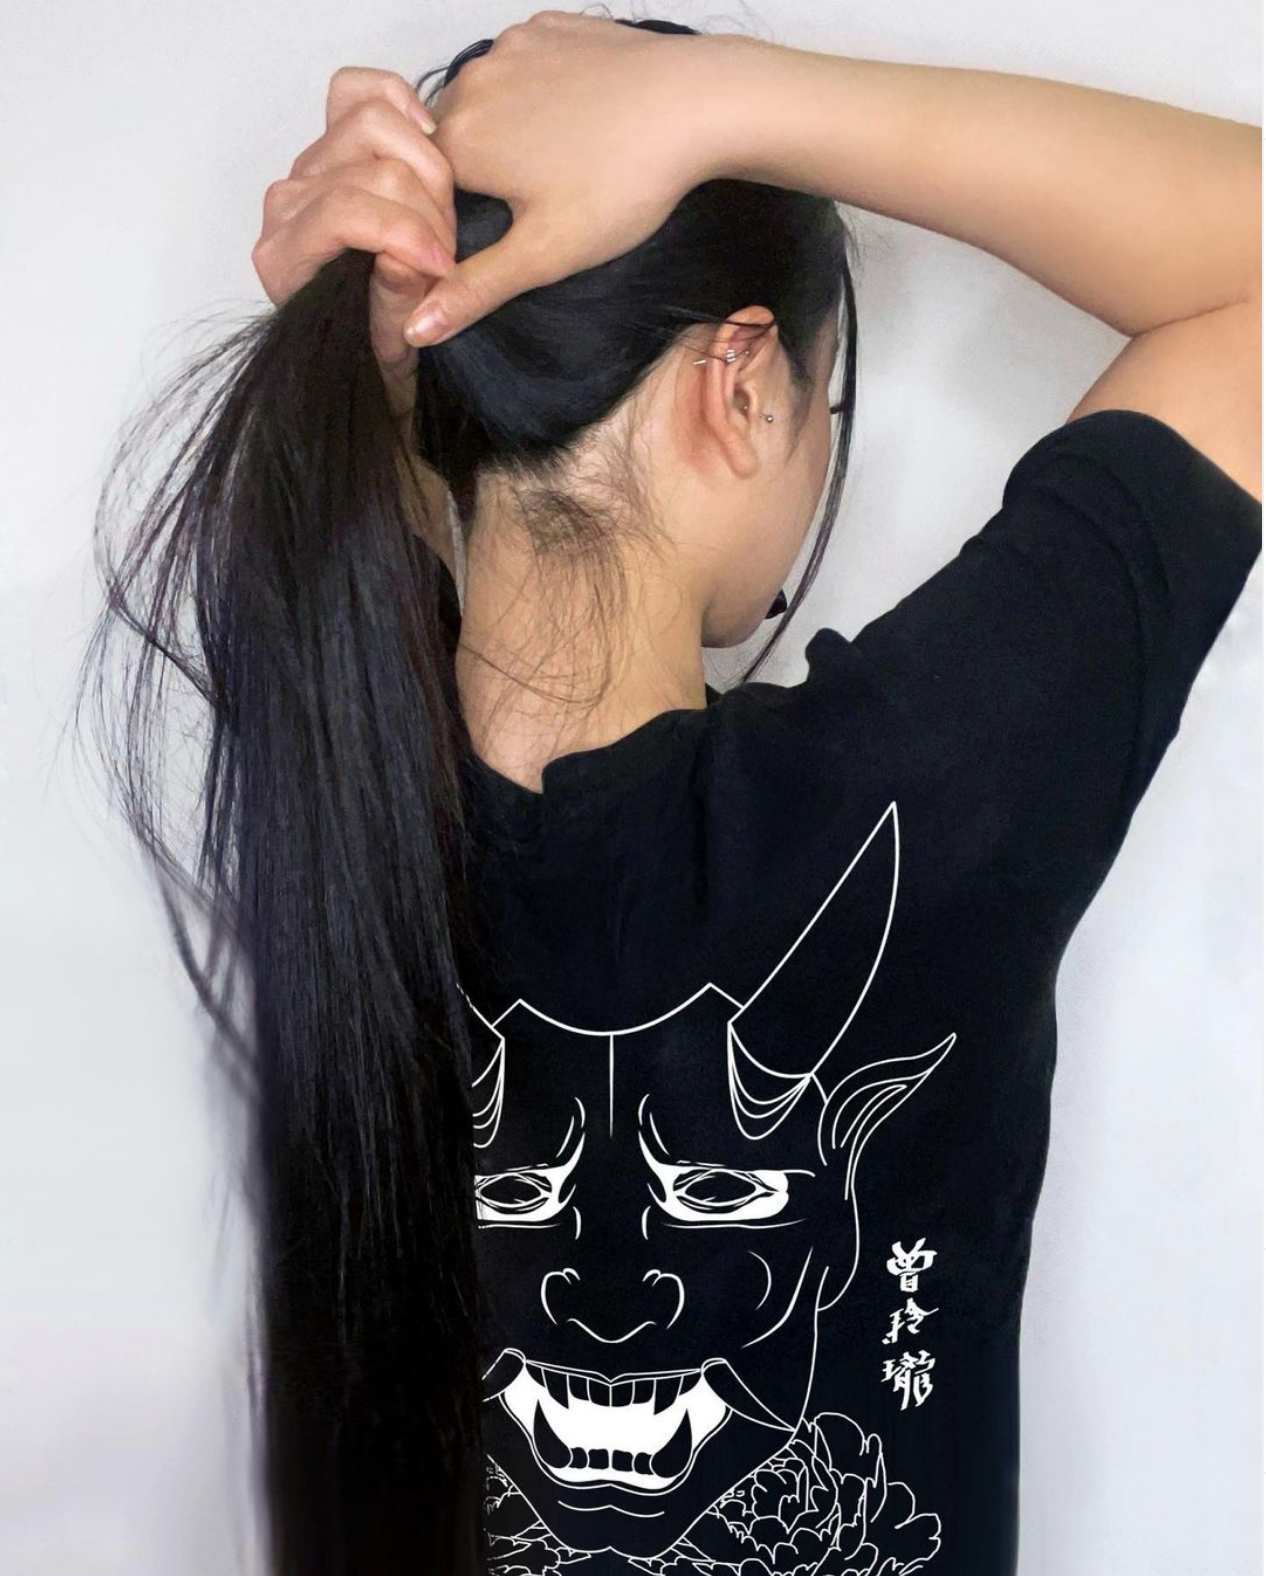 Trillax Original Black Oni Tee T-Shirt Worn by girl